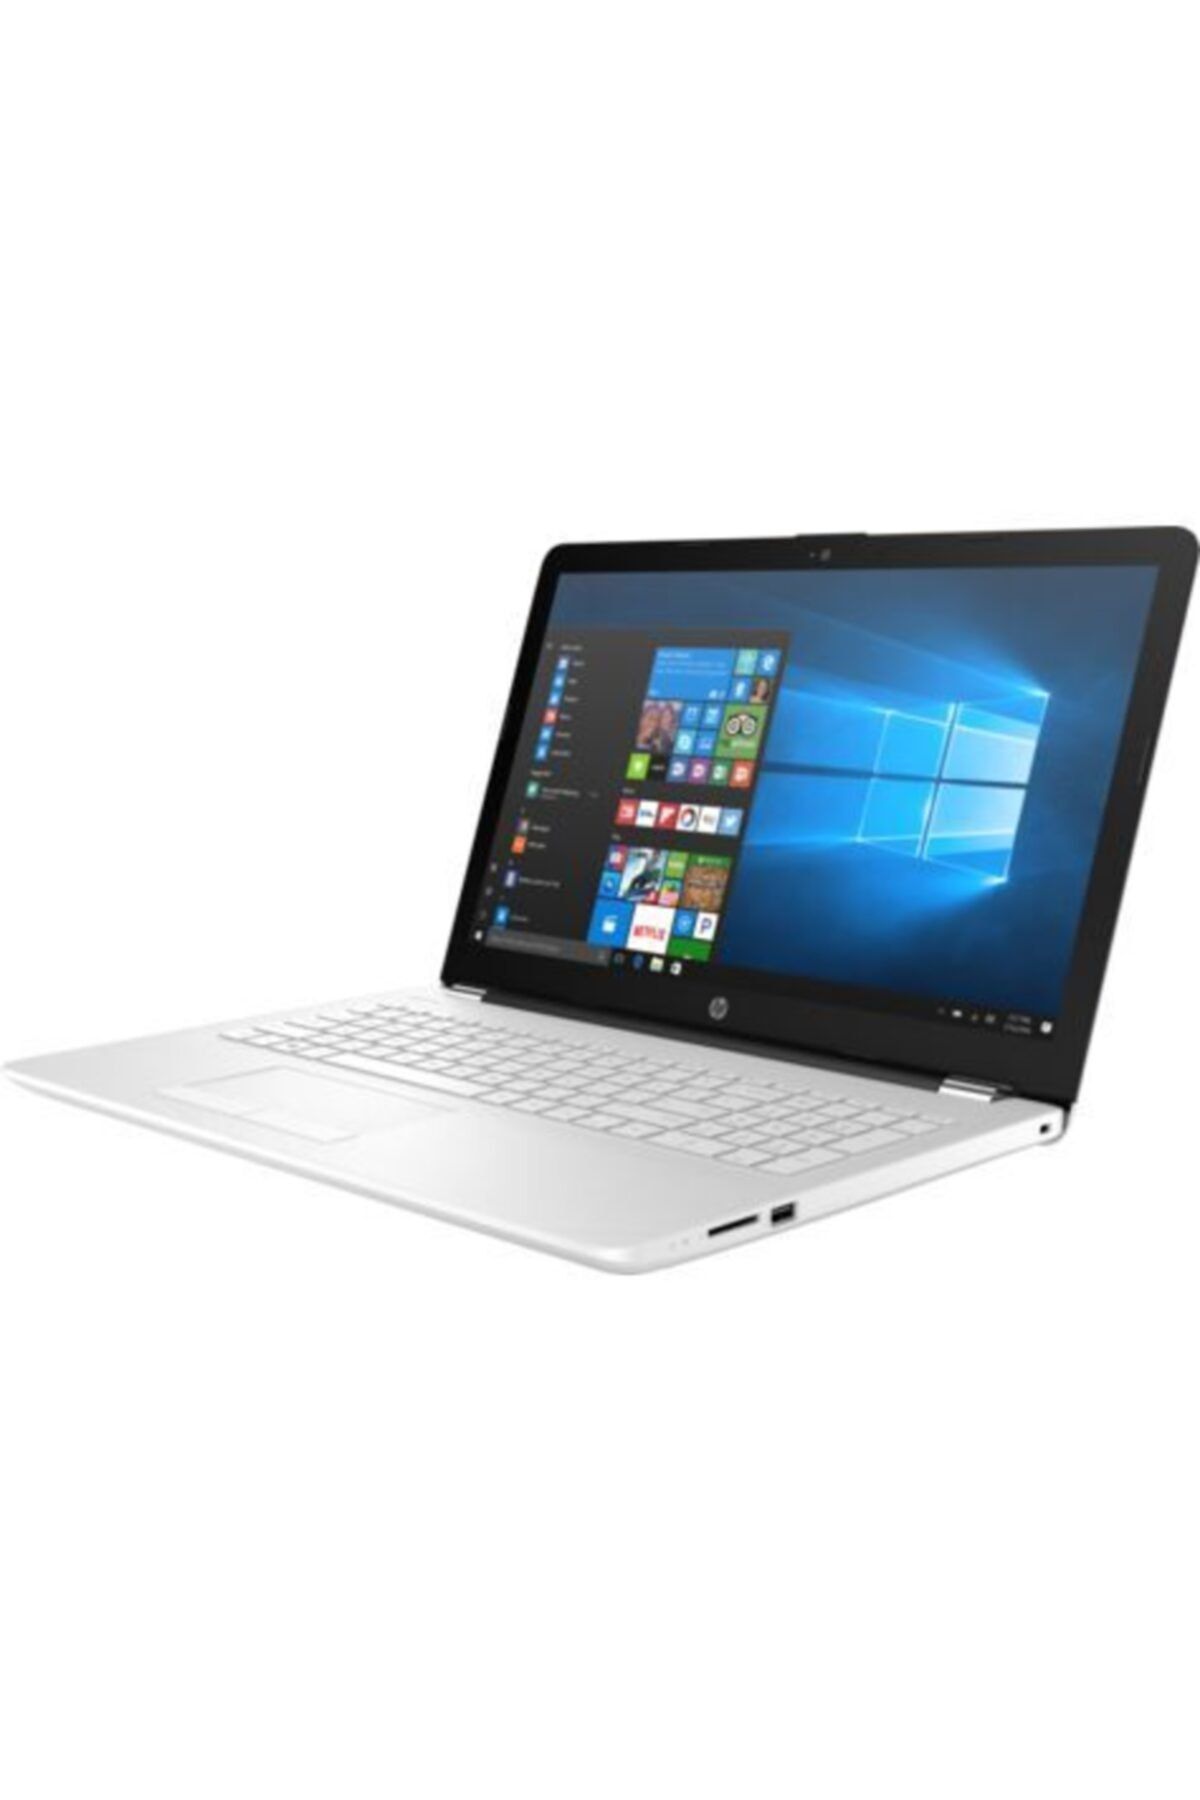 HP Notebook 15-bs127nt Intel Core I3 5005u 2ghz 4gb Ddr3 1tb Hdd 15.6 Windows10 Notebook